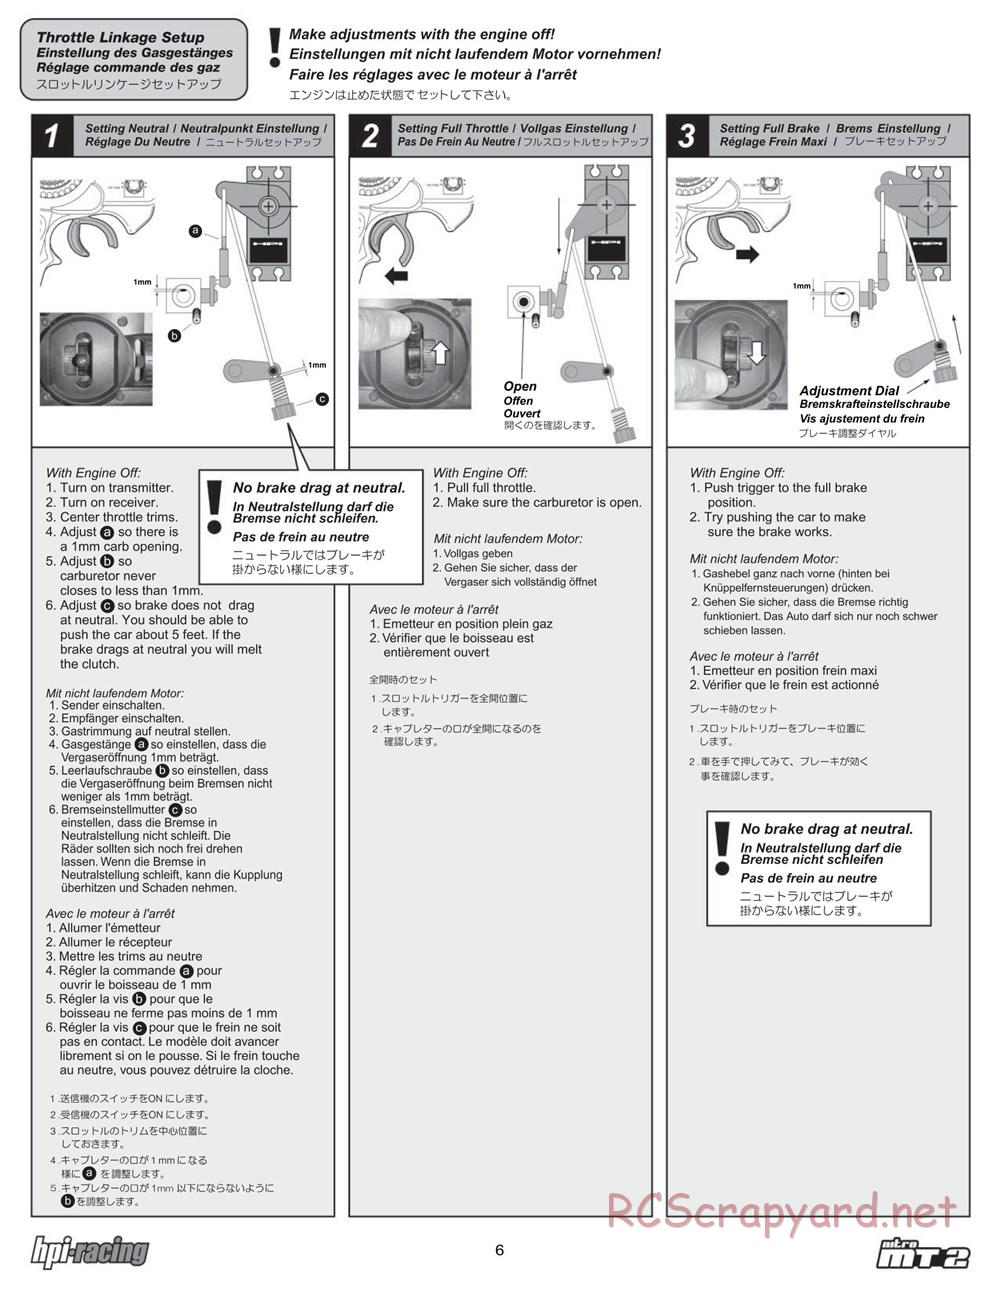 HPI - Nitro MT2 - Manual - Page 6